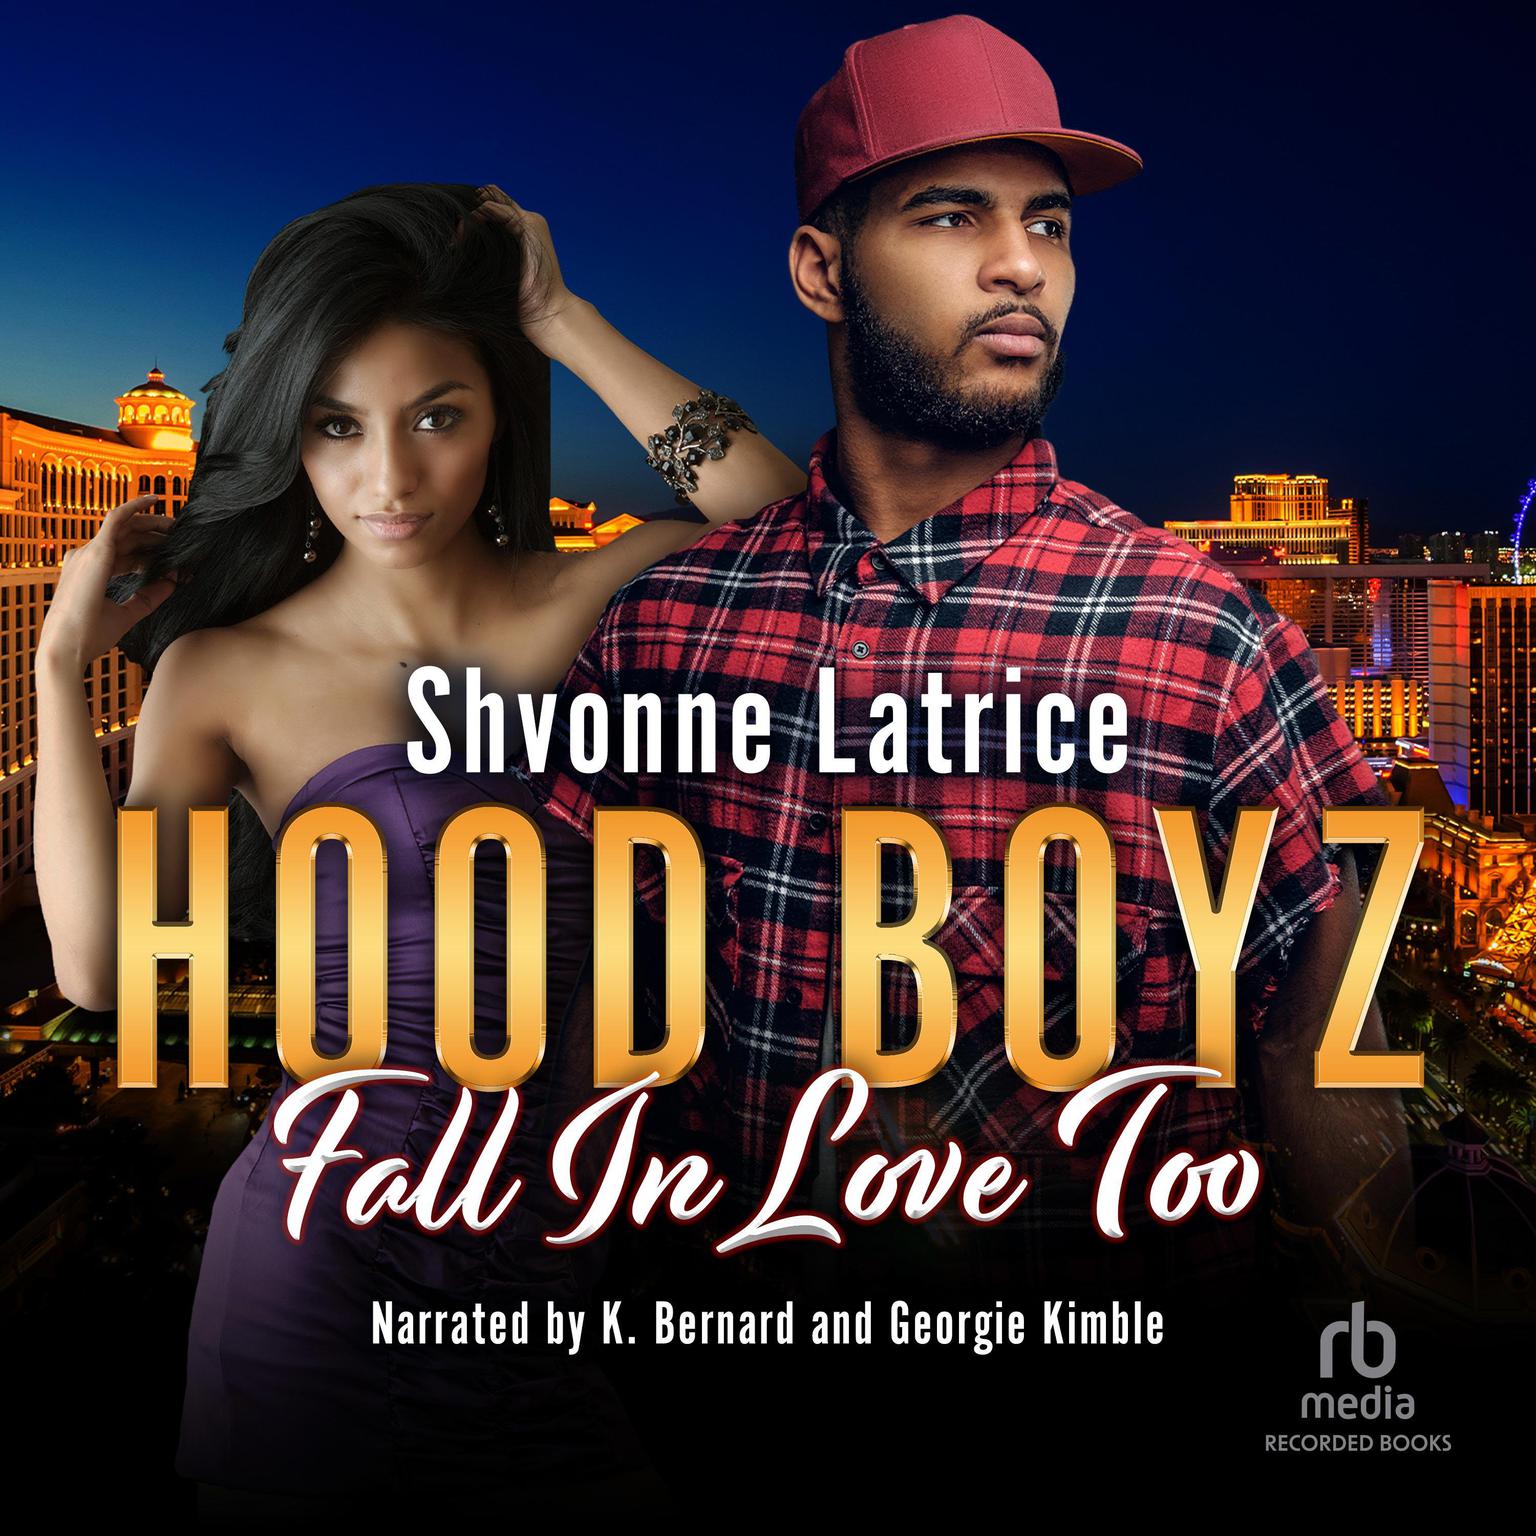 Hood Boyz Fall In Love Too Audiobook, by Shvonne Latrice